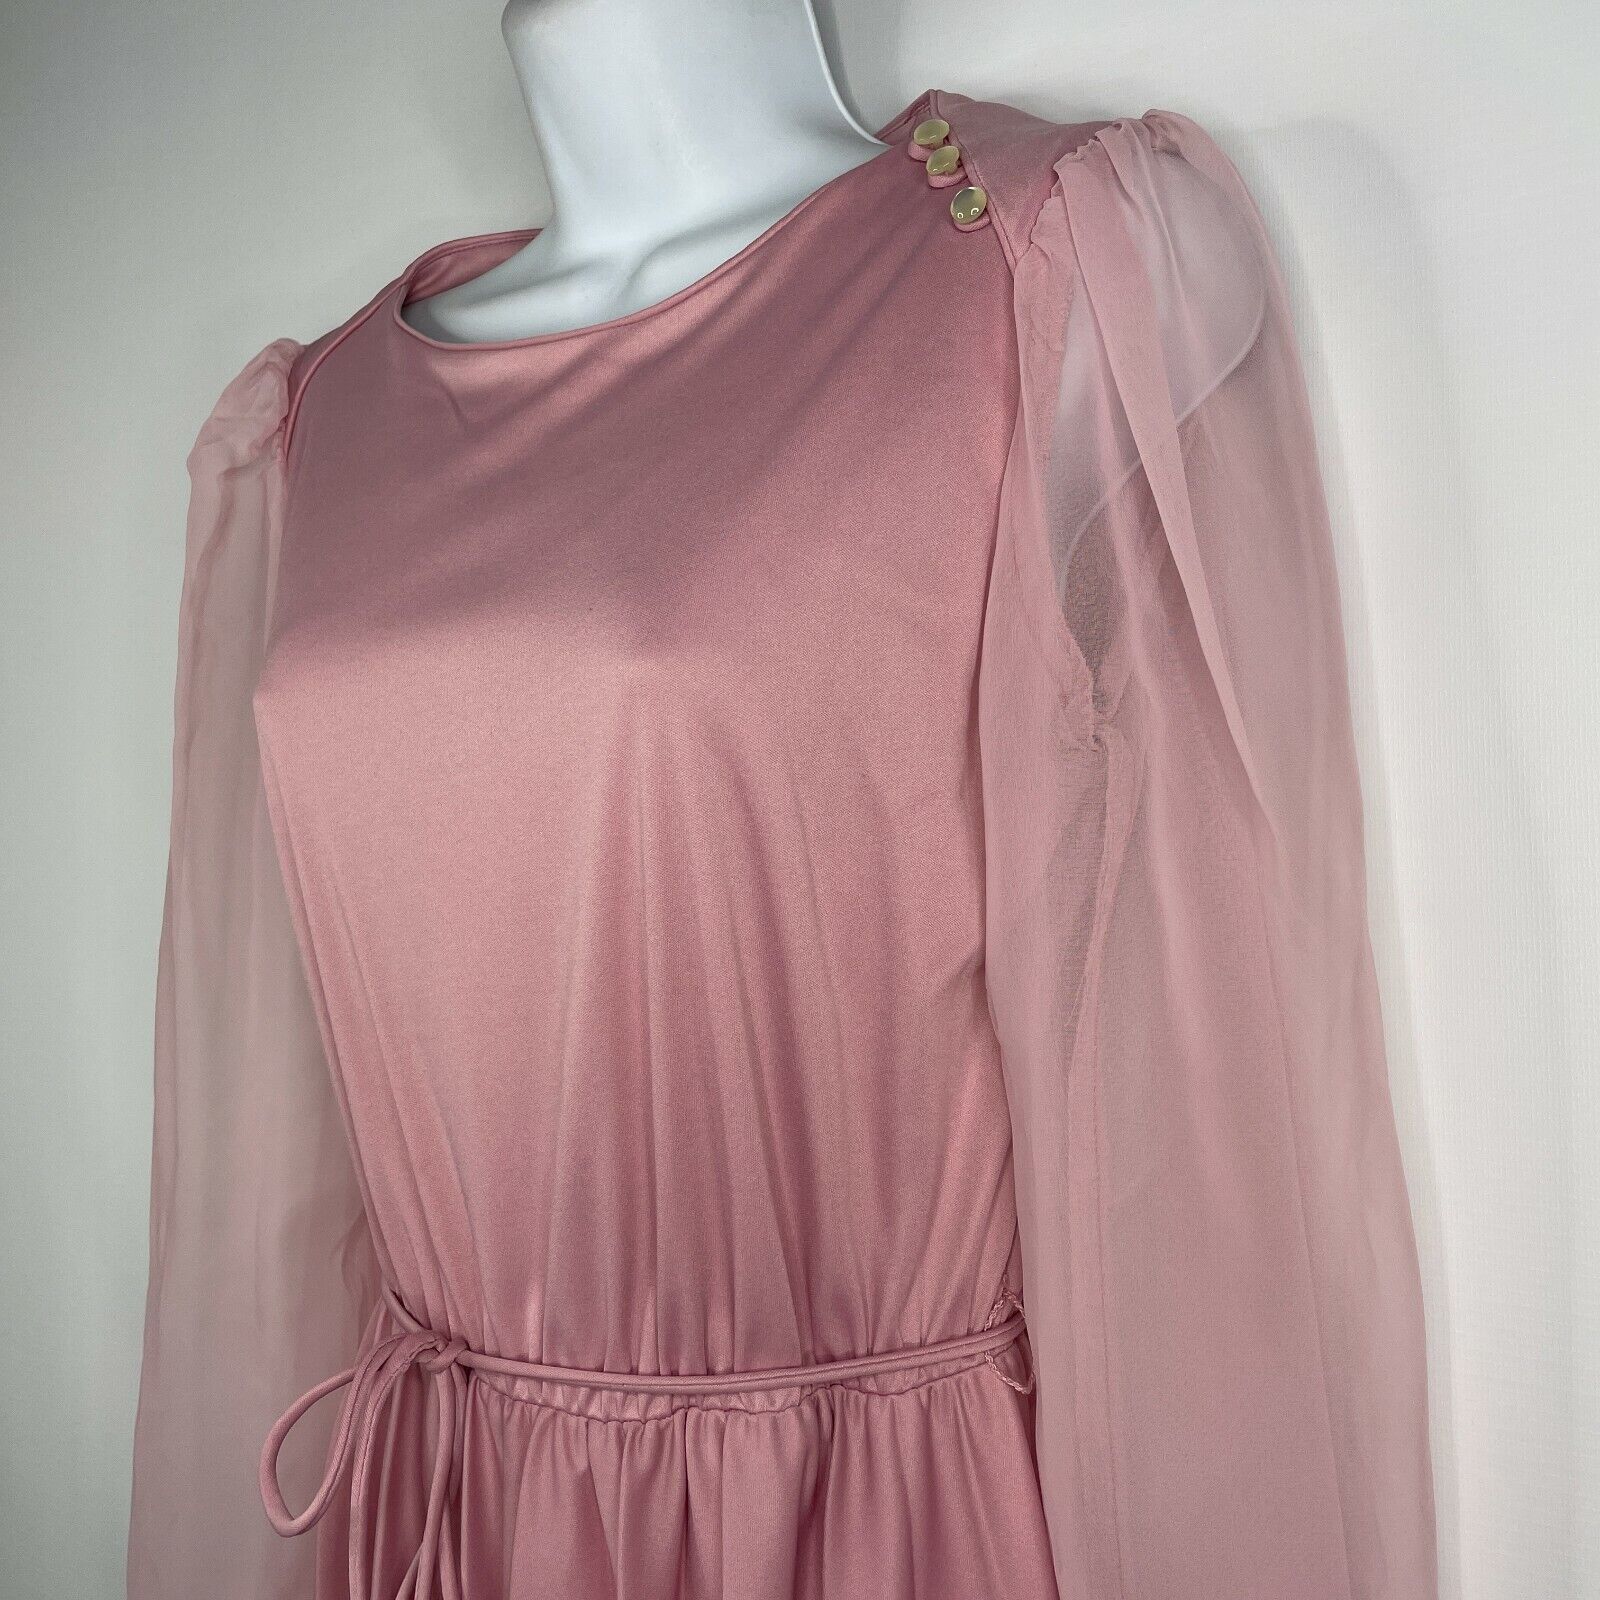 Vintage 70s Lavender Belted Contrast Stich Pleat Fit Flare Dress Size L / US 10 / IT 46 - 6 Thumbnail